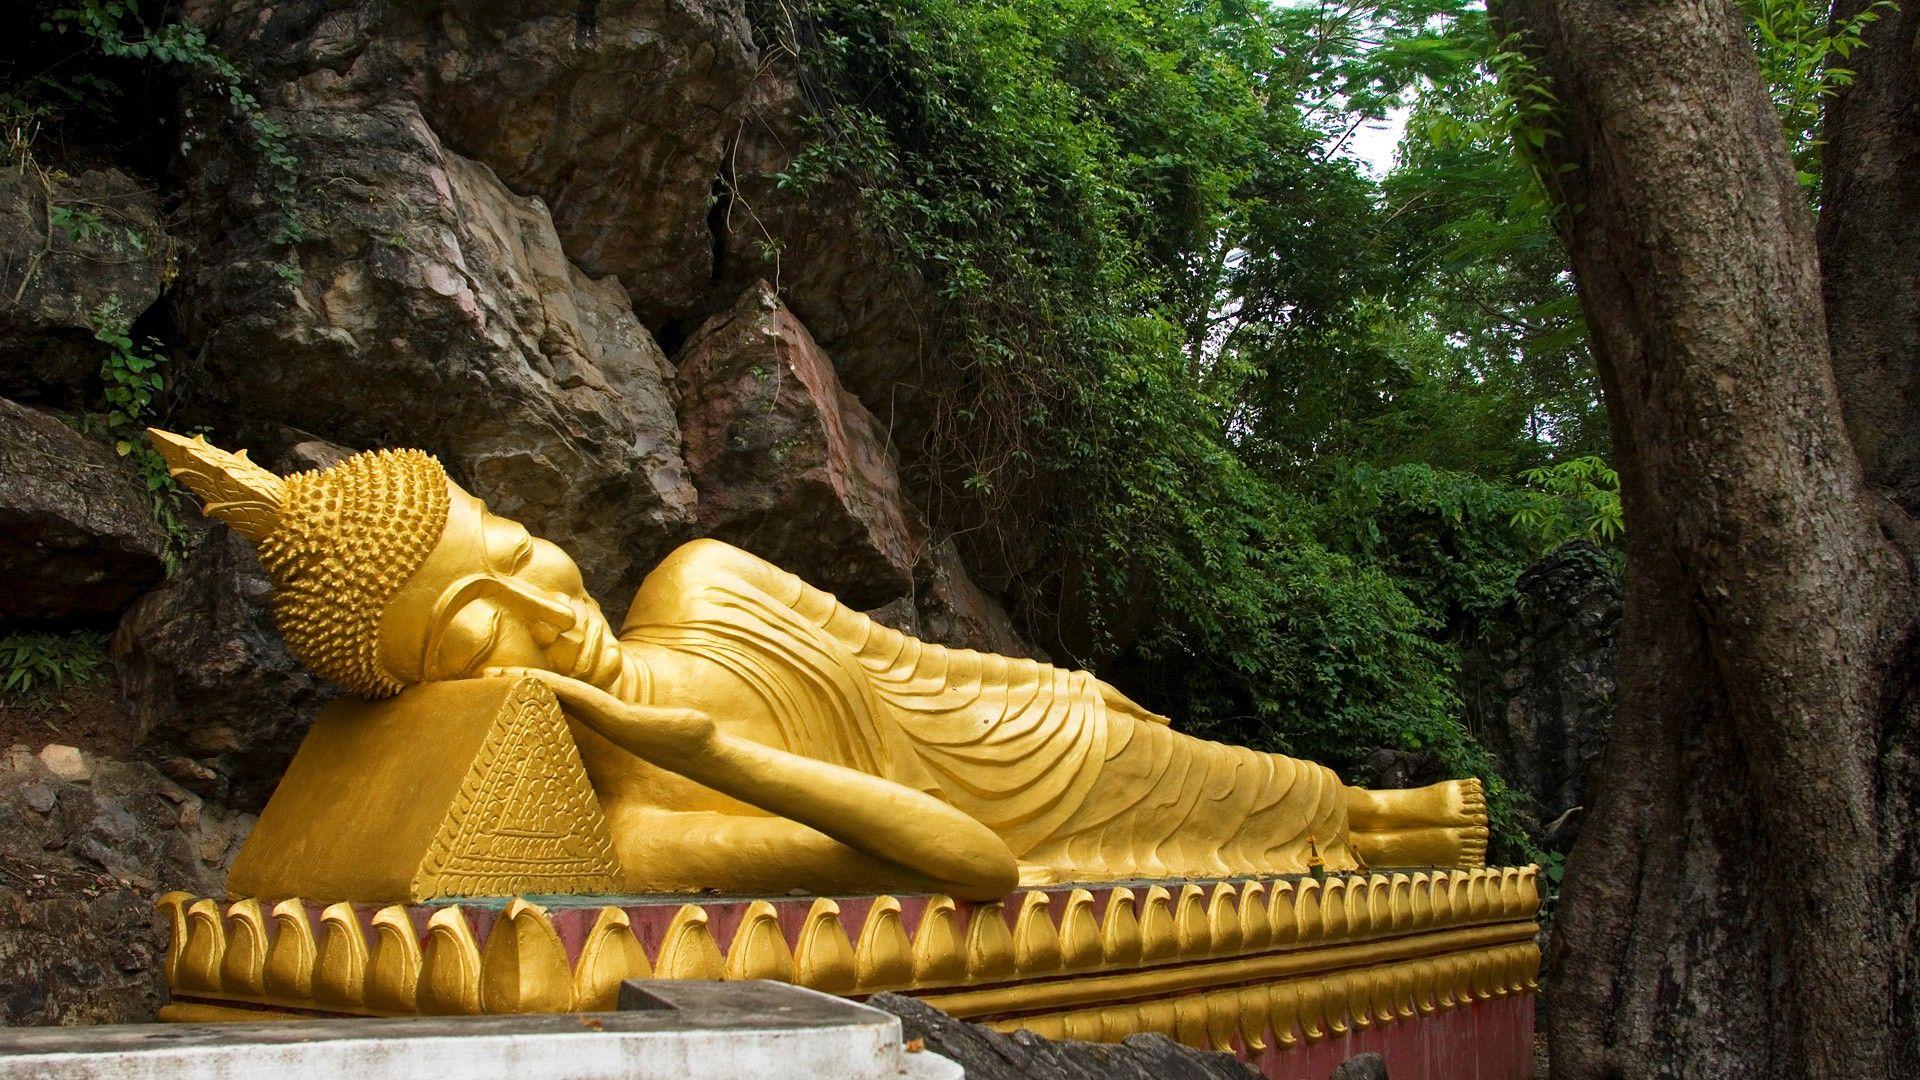 Gautam Buddha HD Wallpaper Image Picture Photo Download